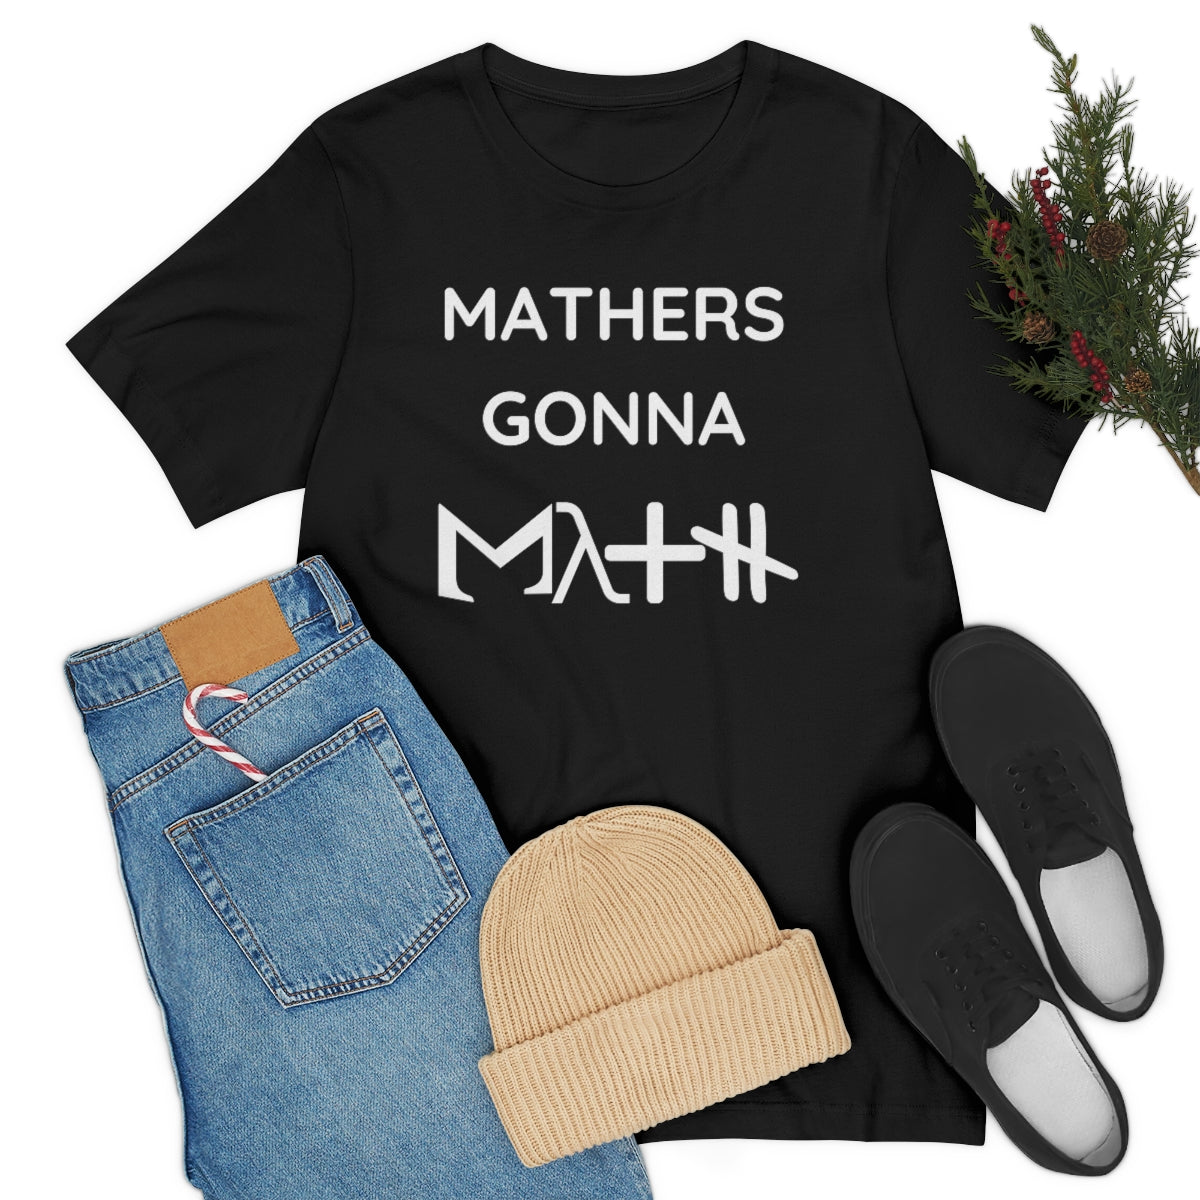 Mathers Gonna Math Unisex Short Sleeve Tee